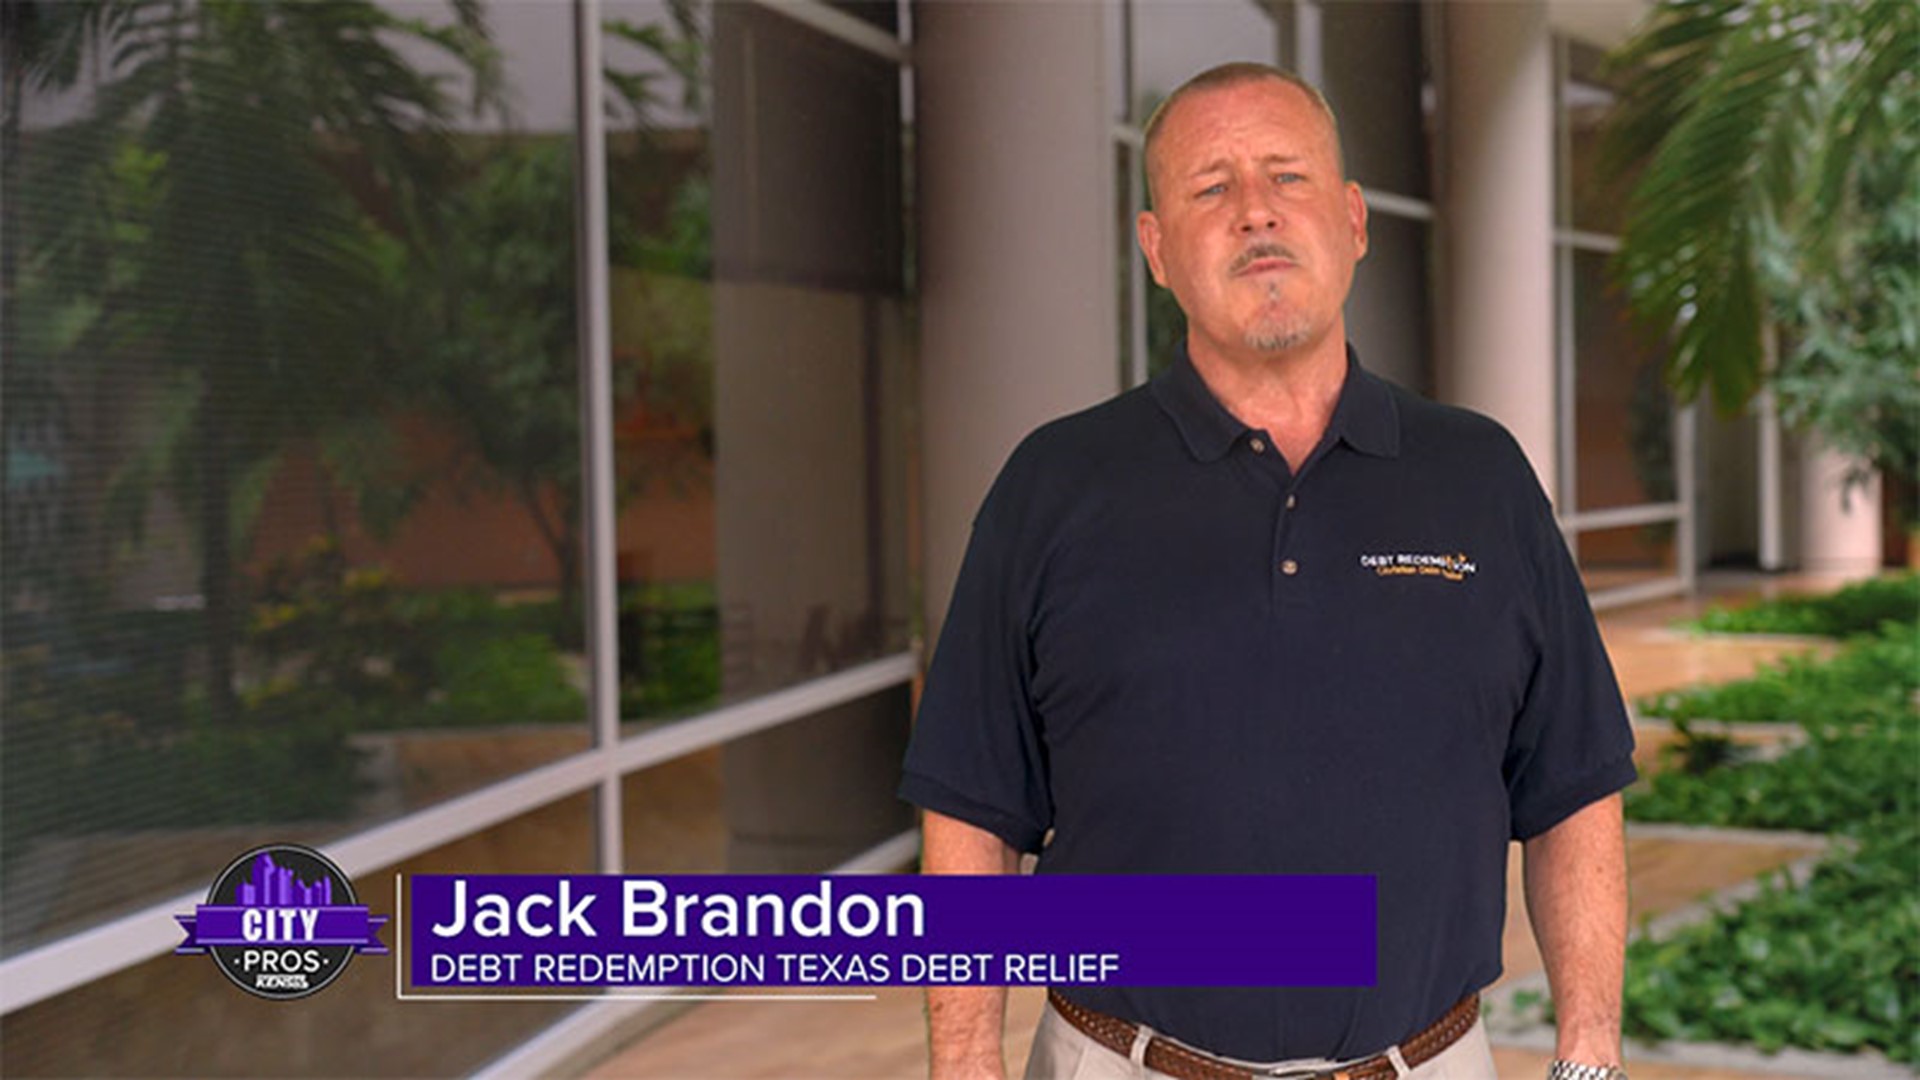 Debt Redemption Texas Debt Relief has programs that can help you get debt under control.